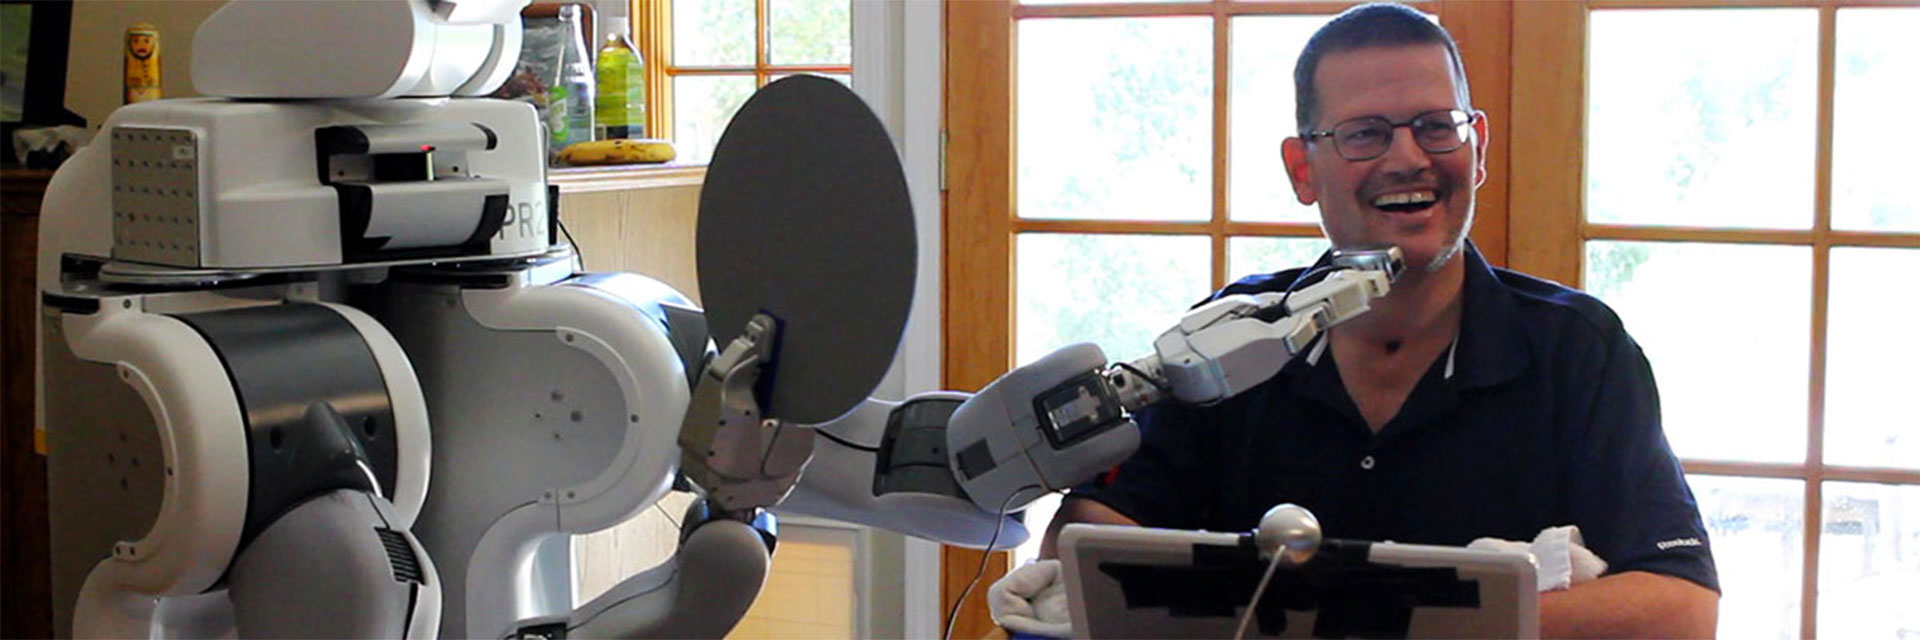 A quadriplegic man gets help shaving his face from a robot. 